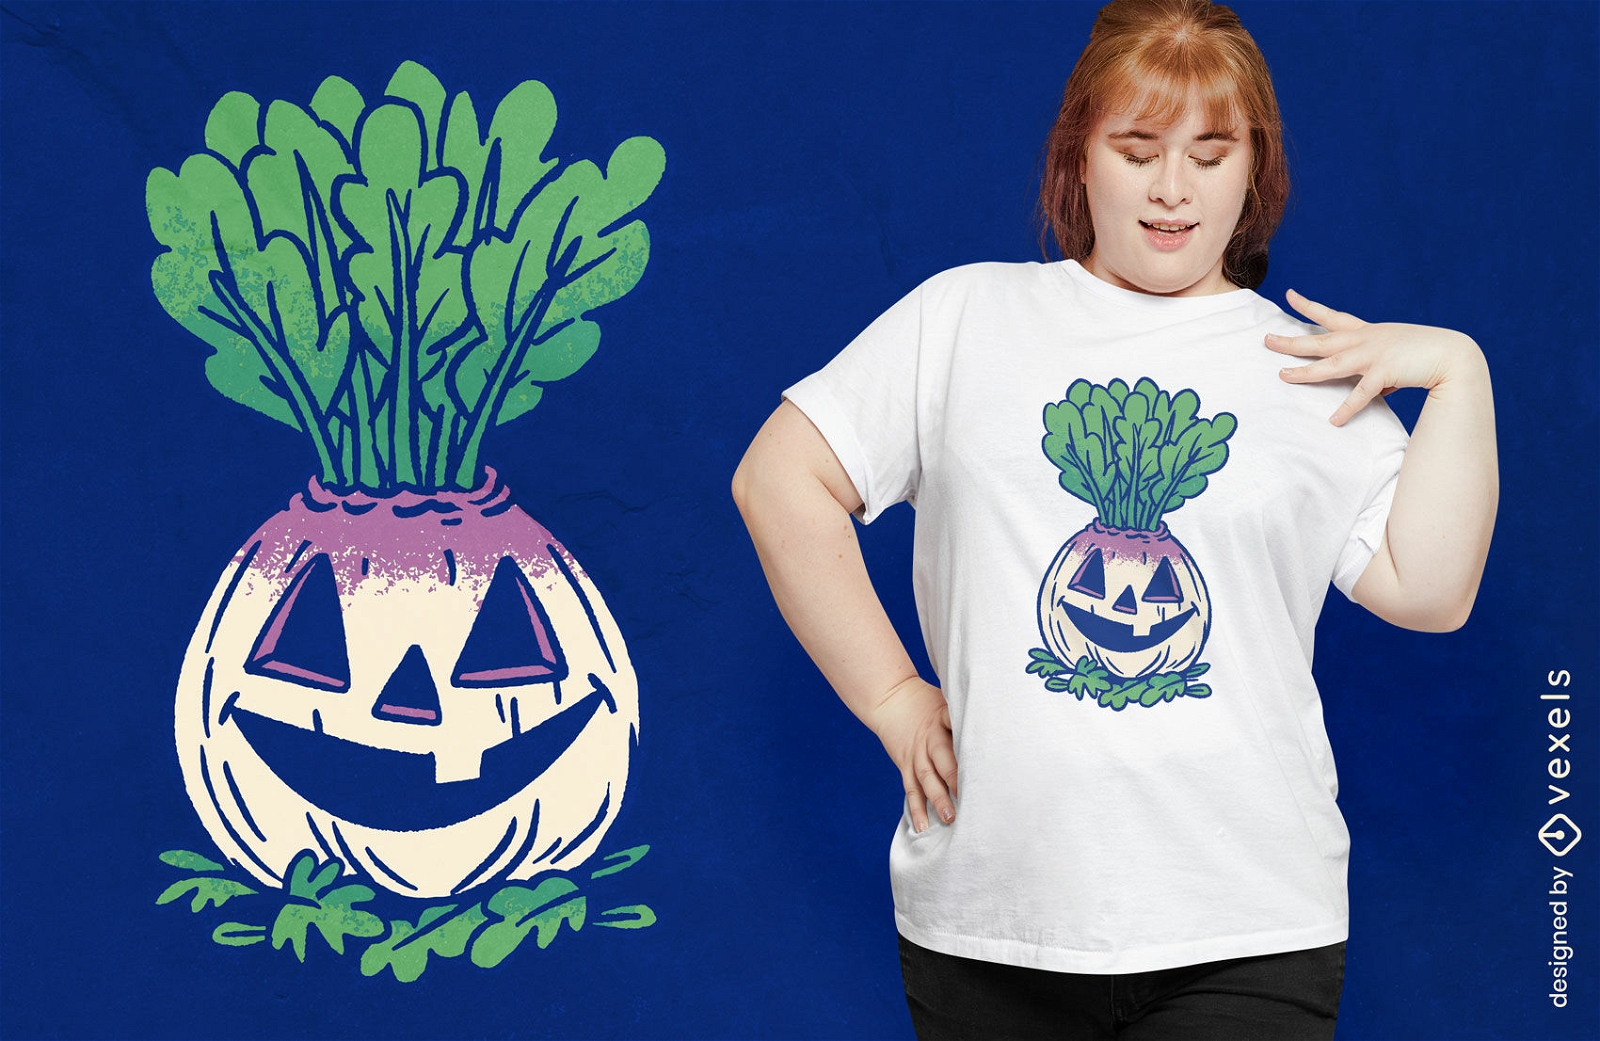 Jack o lantern turnip halloween t-shirt design